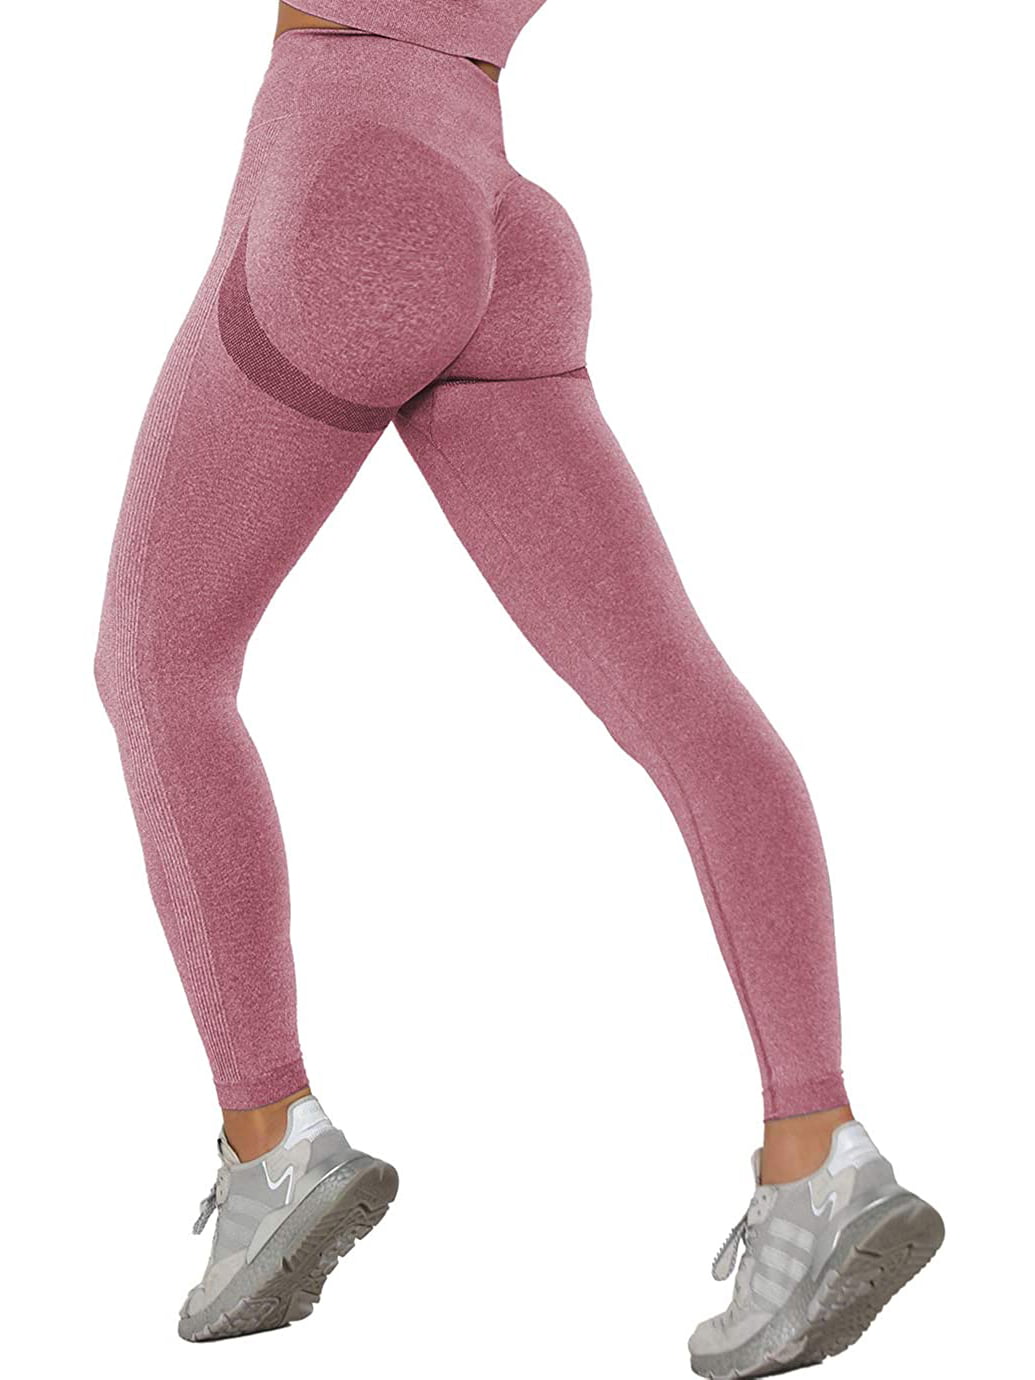 VASLANDA Women's High Waist Yoga Leggings With Pockets Tummy Control  Workout Running Pants 4 Way Stretch Gym Fitness Activewears Yoga Tights 